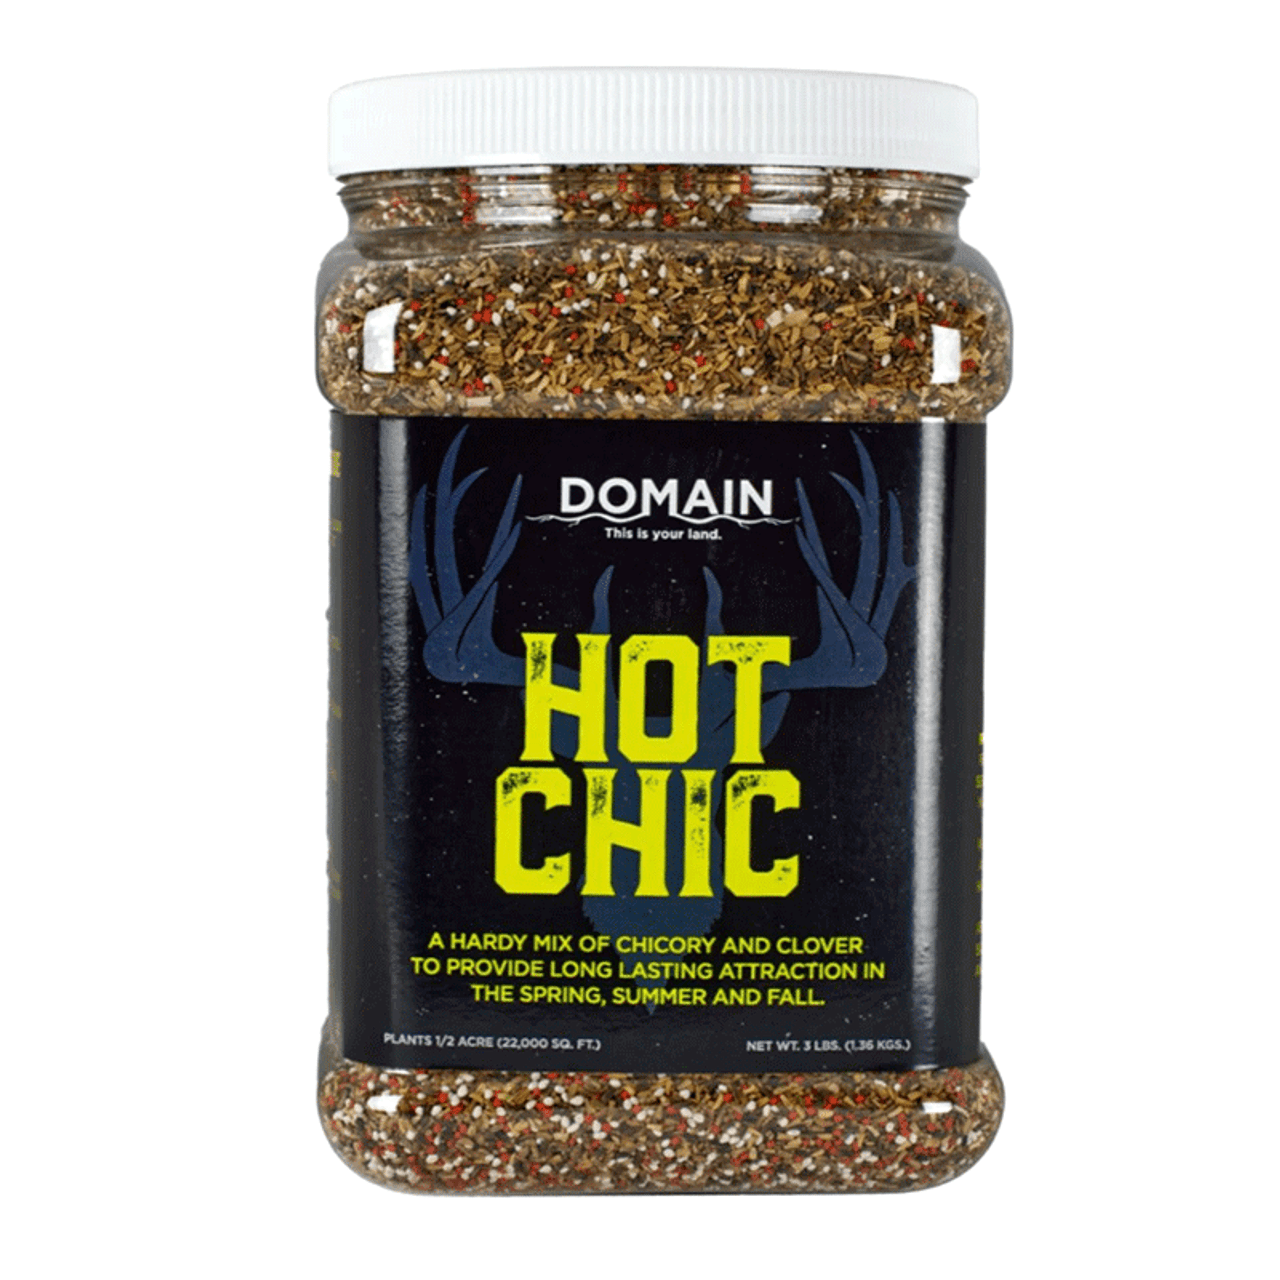 Hot Chic Food Plot Mix